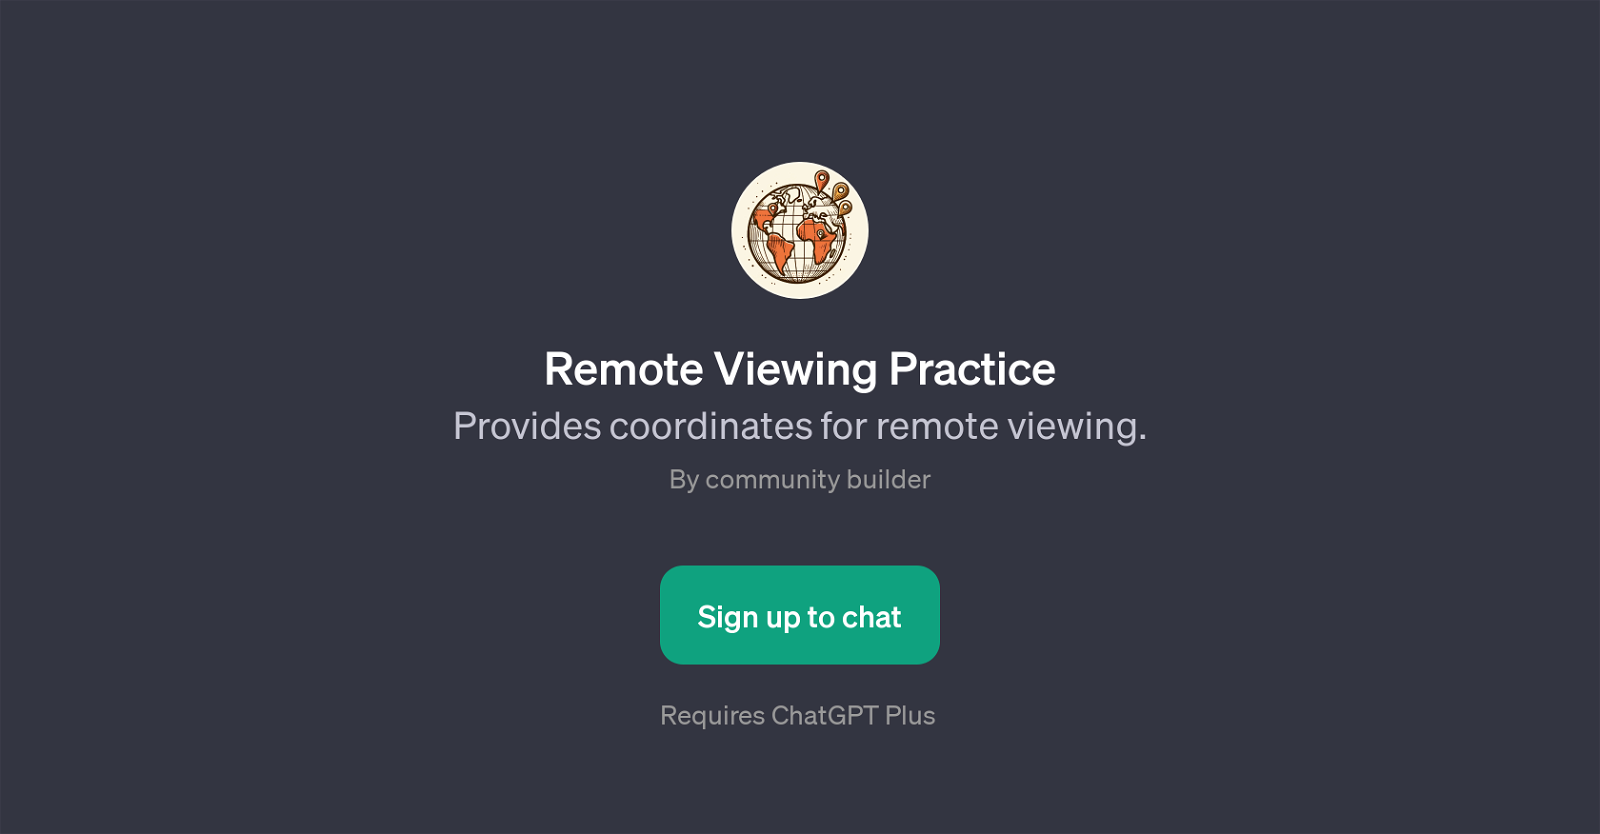 Remote Viewing Practice website